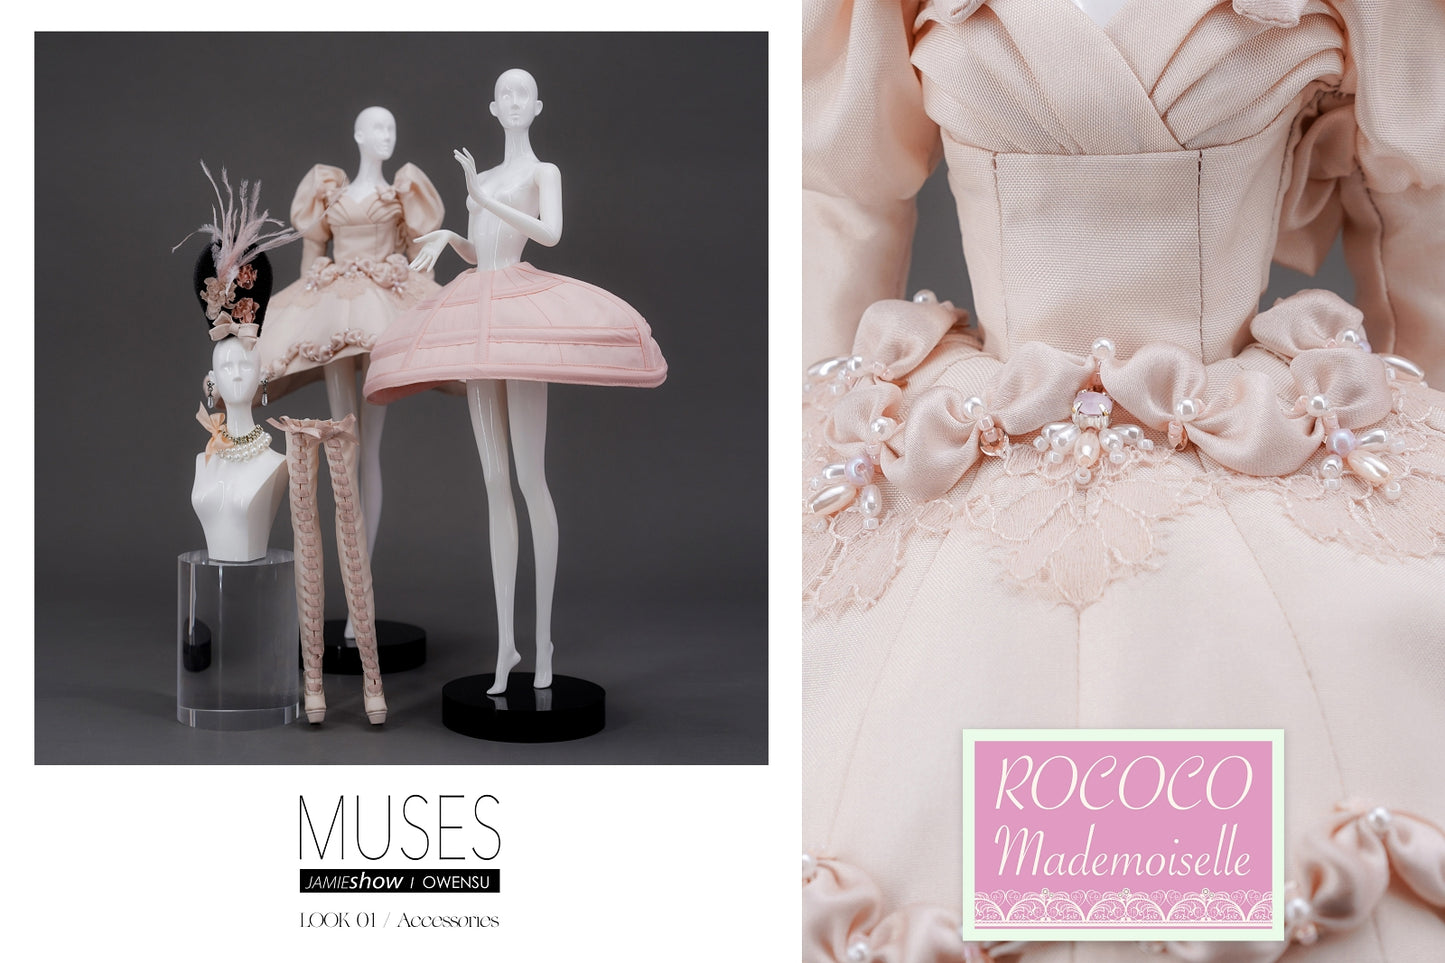 JAMIEshow Muses Rococo Mademoiselle Fashion #1